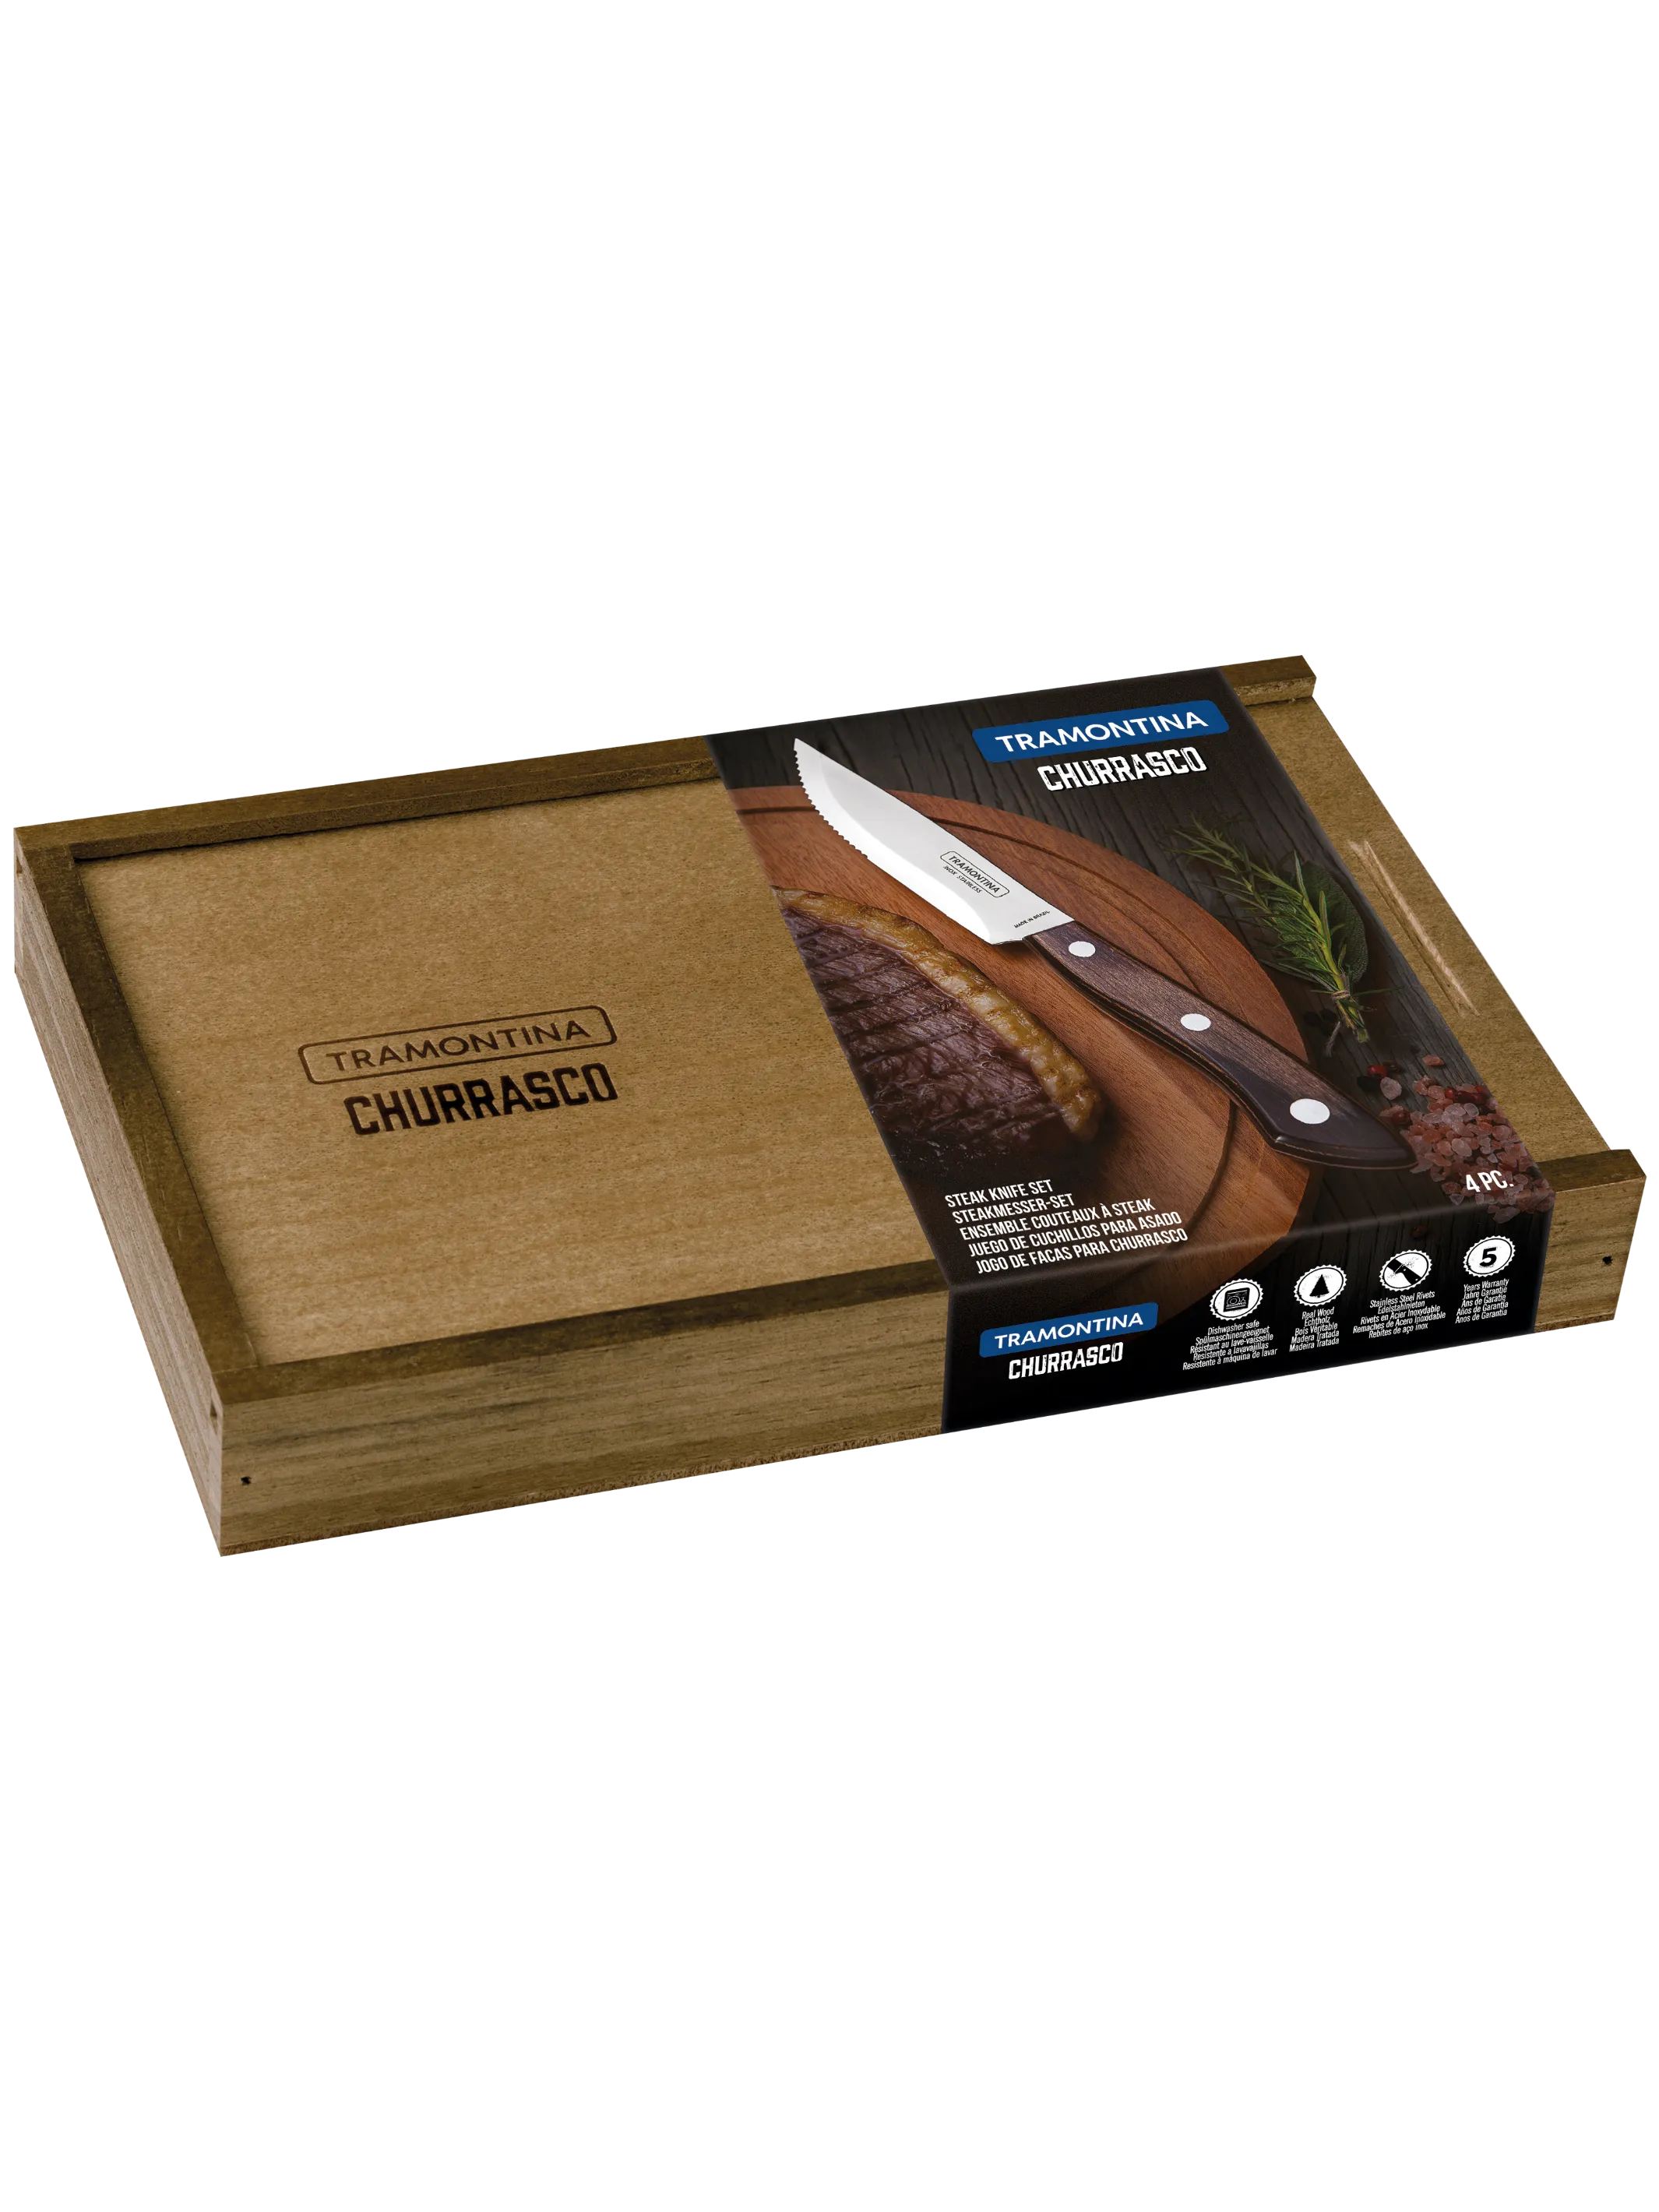 Tramontina 29899513 Churrasco Bueno kés szett fa dobozban 4db